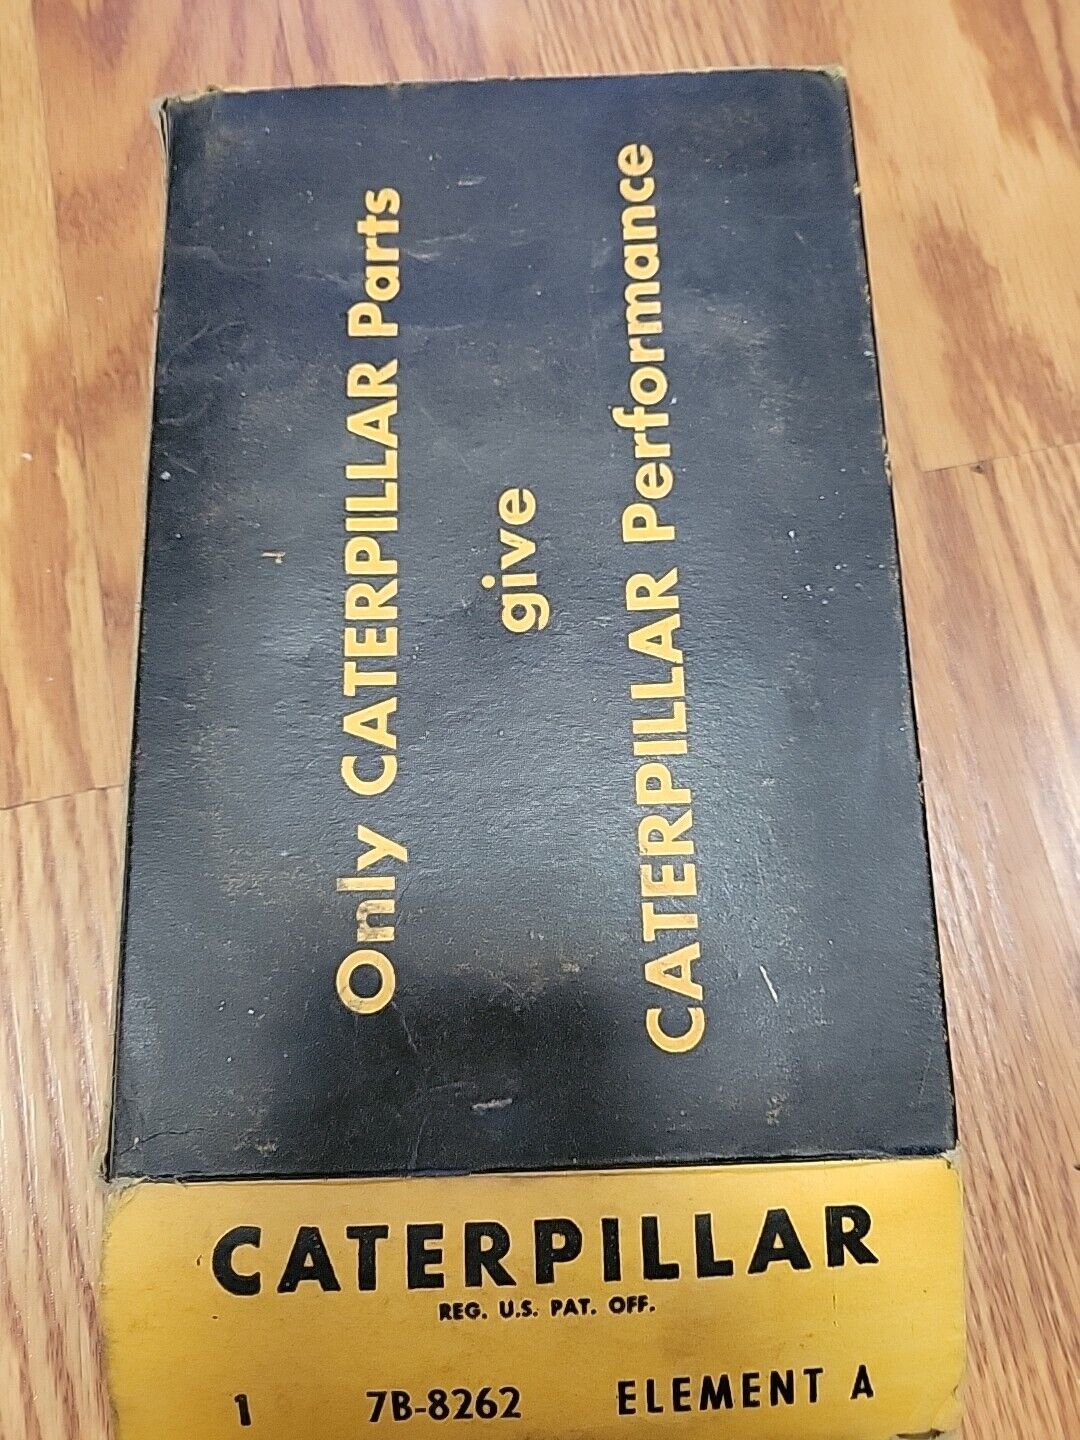 3 Vintage Caterpillar Fuel Filter Element A (7B-8262) NEW OLD STOCK original box